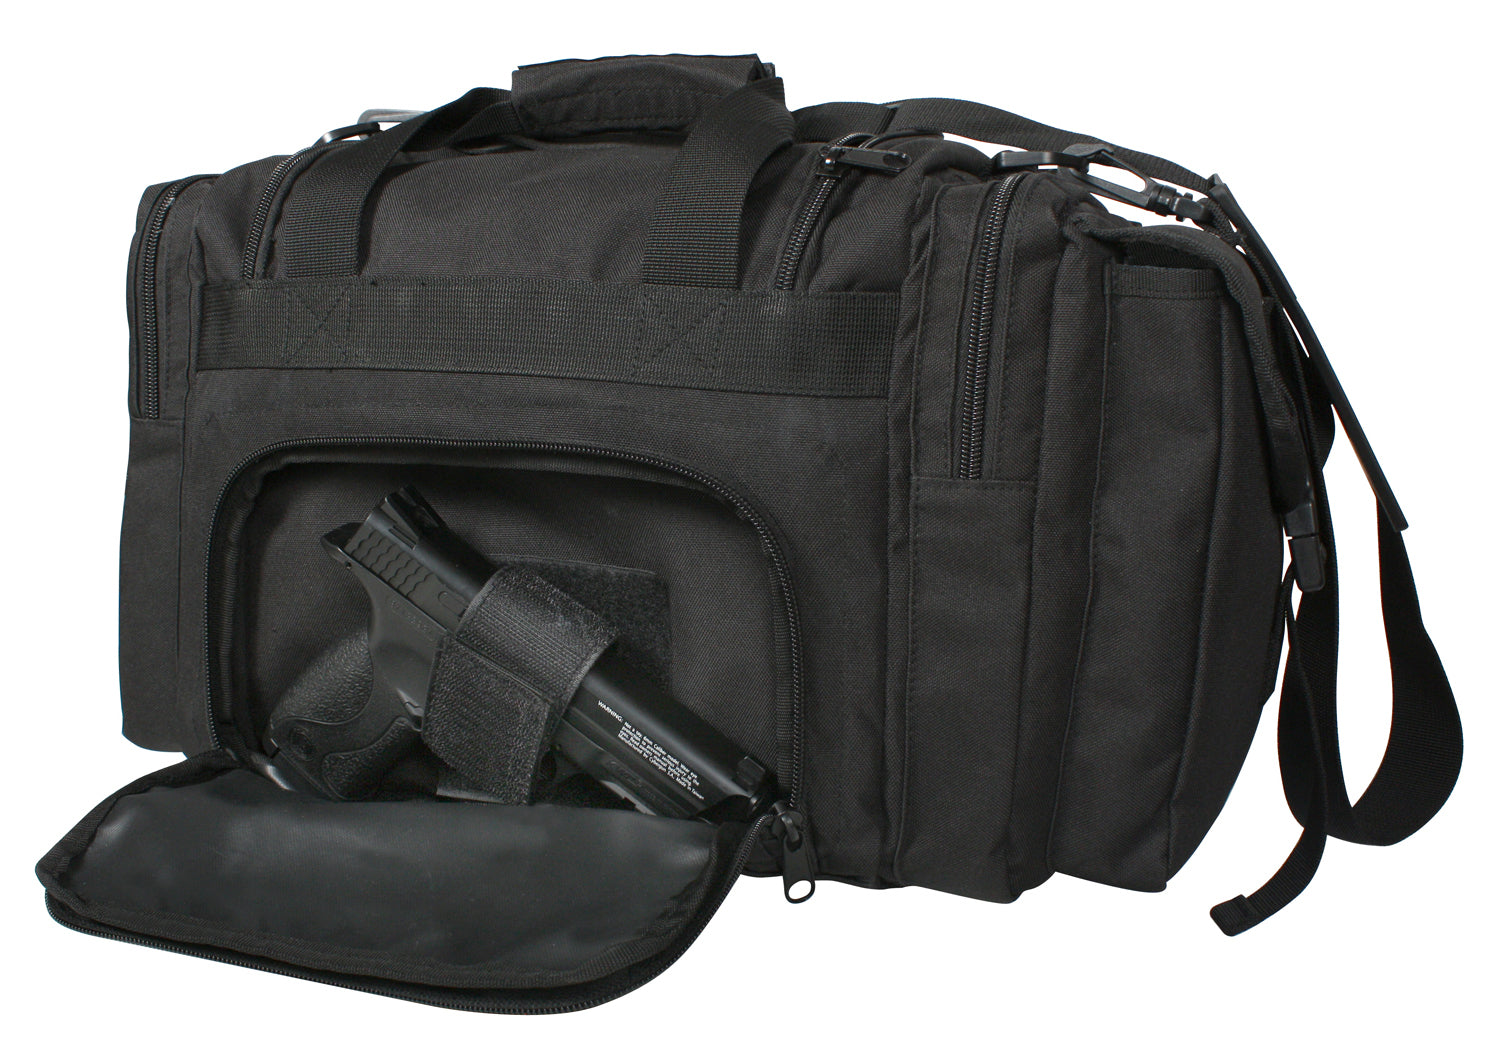 Concealed Carry Bag